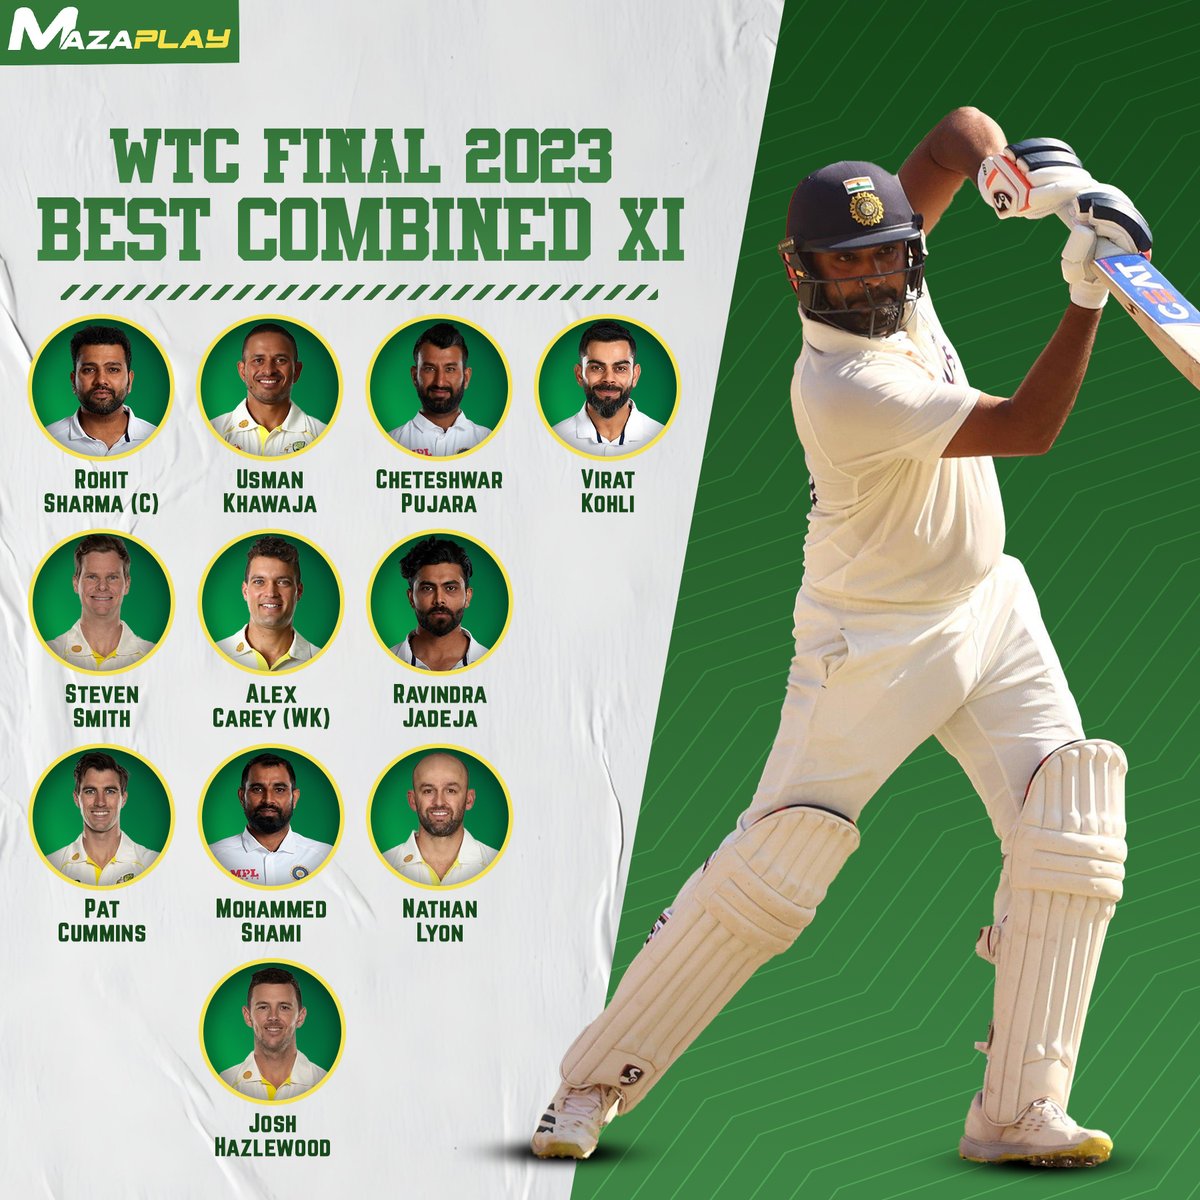 Here's our best combined XI for the WTC final 2023.

#Cricket #BestXI #AUSvIND #WTCFinal #Test #RohitSharma #PatCummins #ViratKohli #MazaPlay